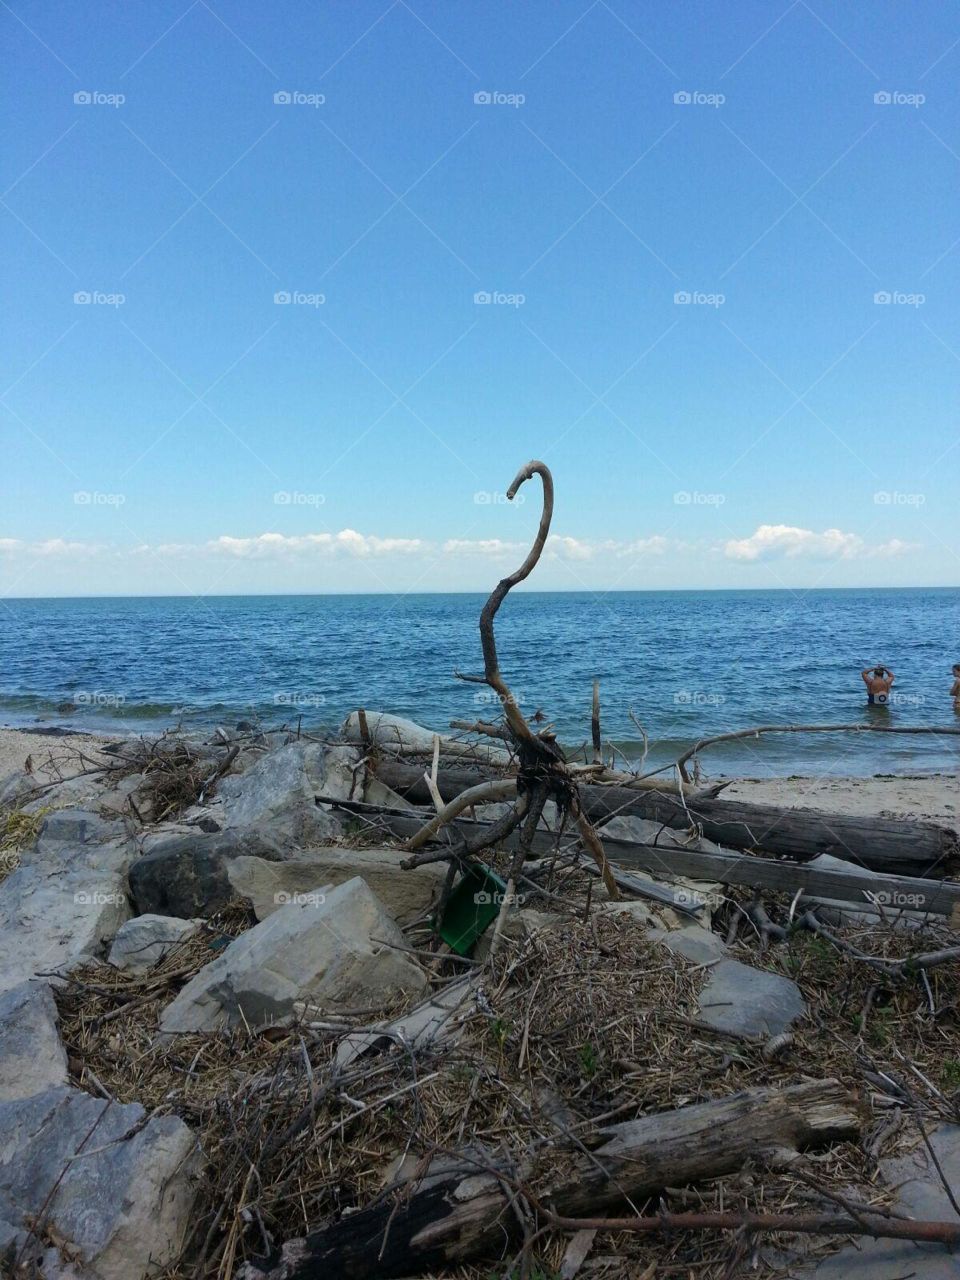 Driftwood Crane at the beach